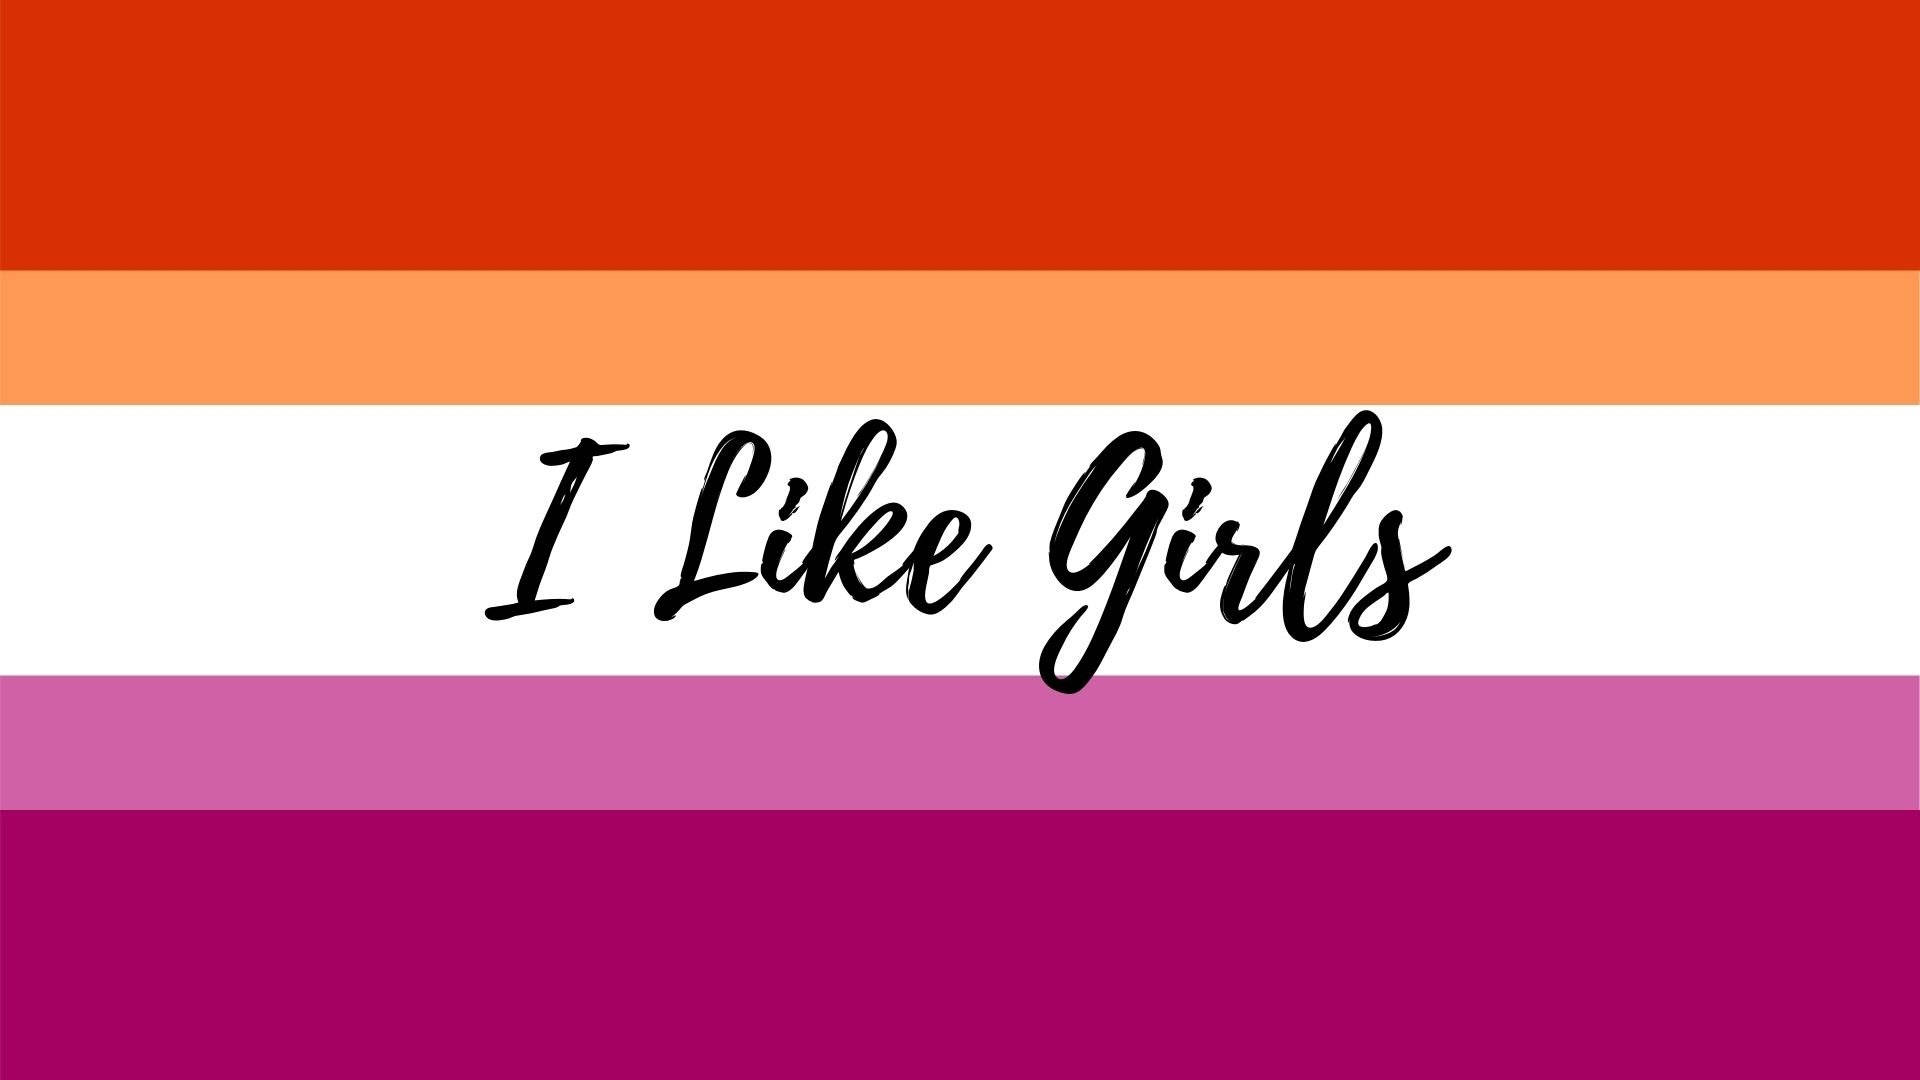 I Like Girls Lesbian Flag Background